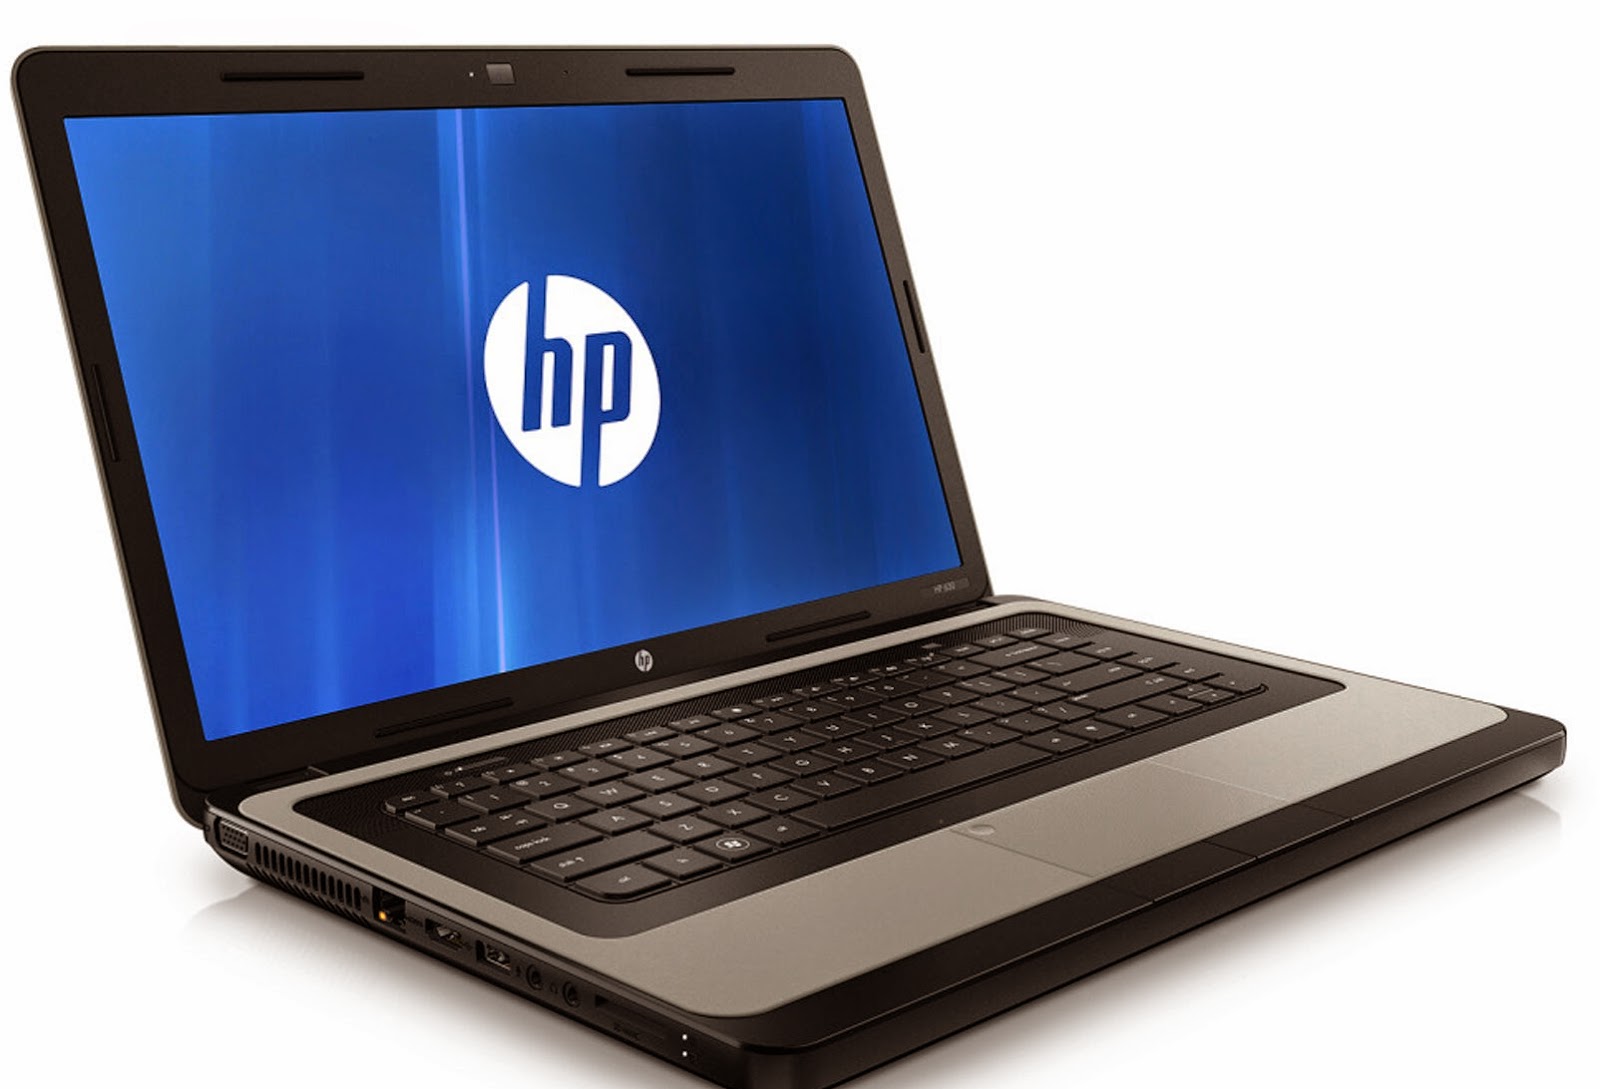 HP 240 G1 Drivers For Windows 7 (32/64bit) - Laptop Drivers